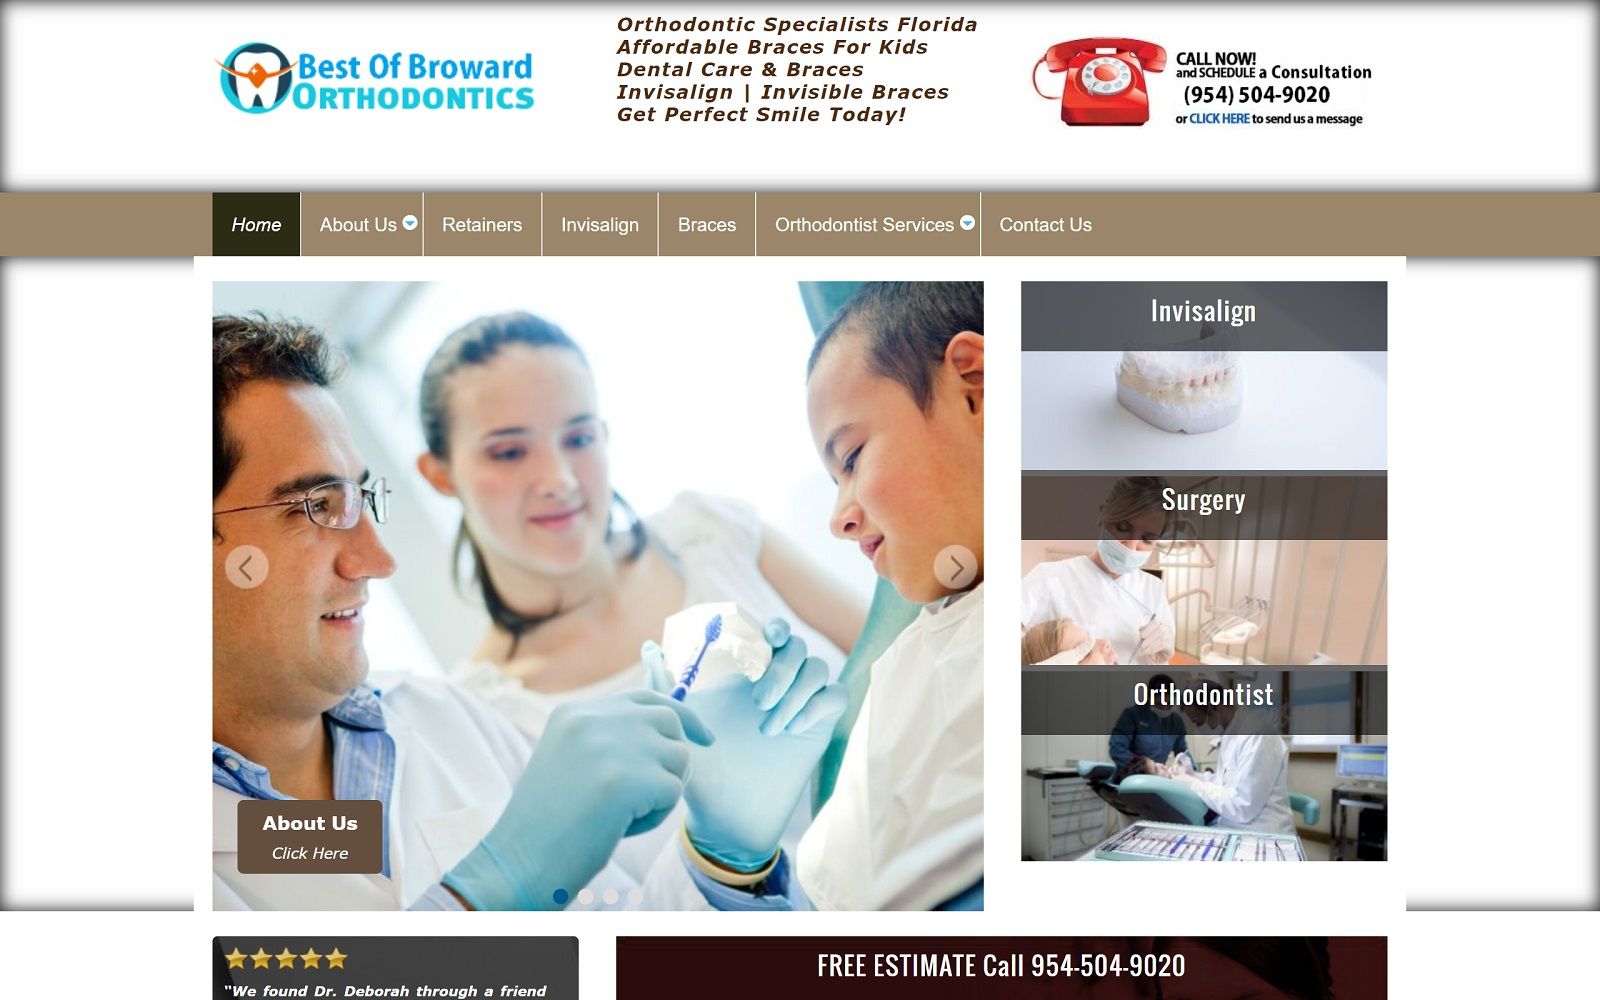 The screenshot of the best of broward orthodontists thebestofbroward. Com/orthodontists website